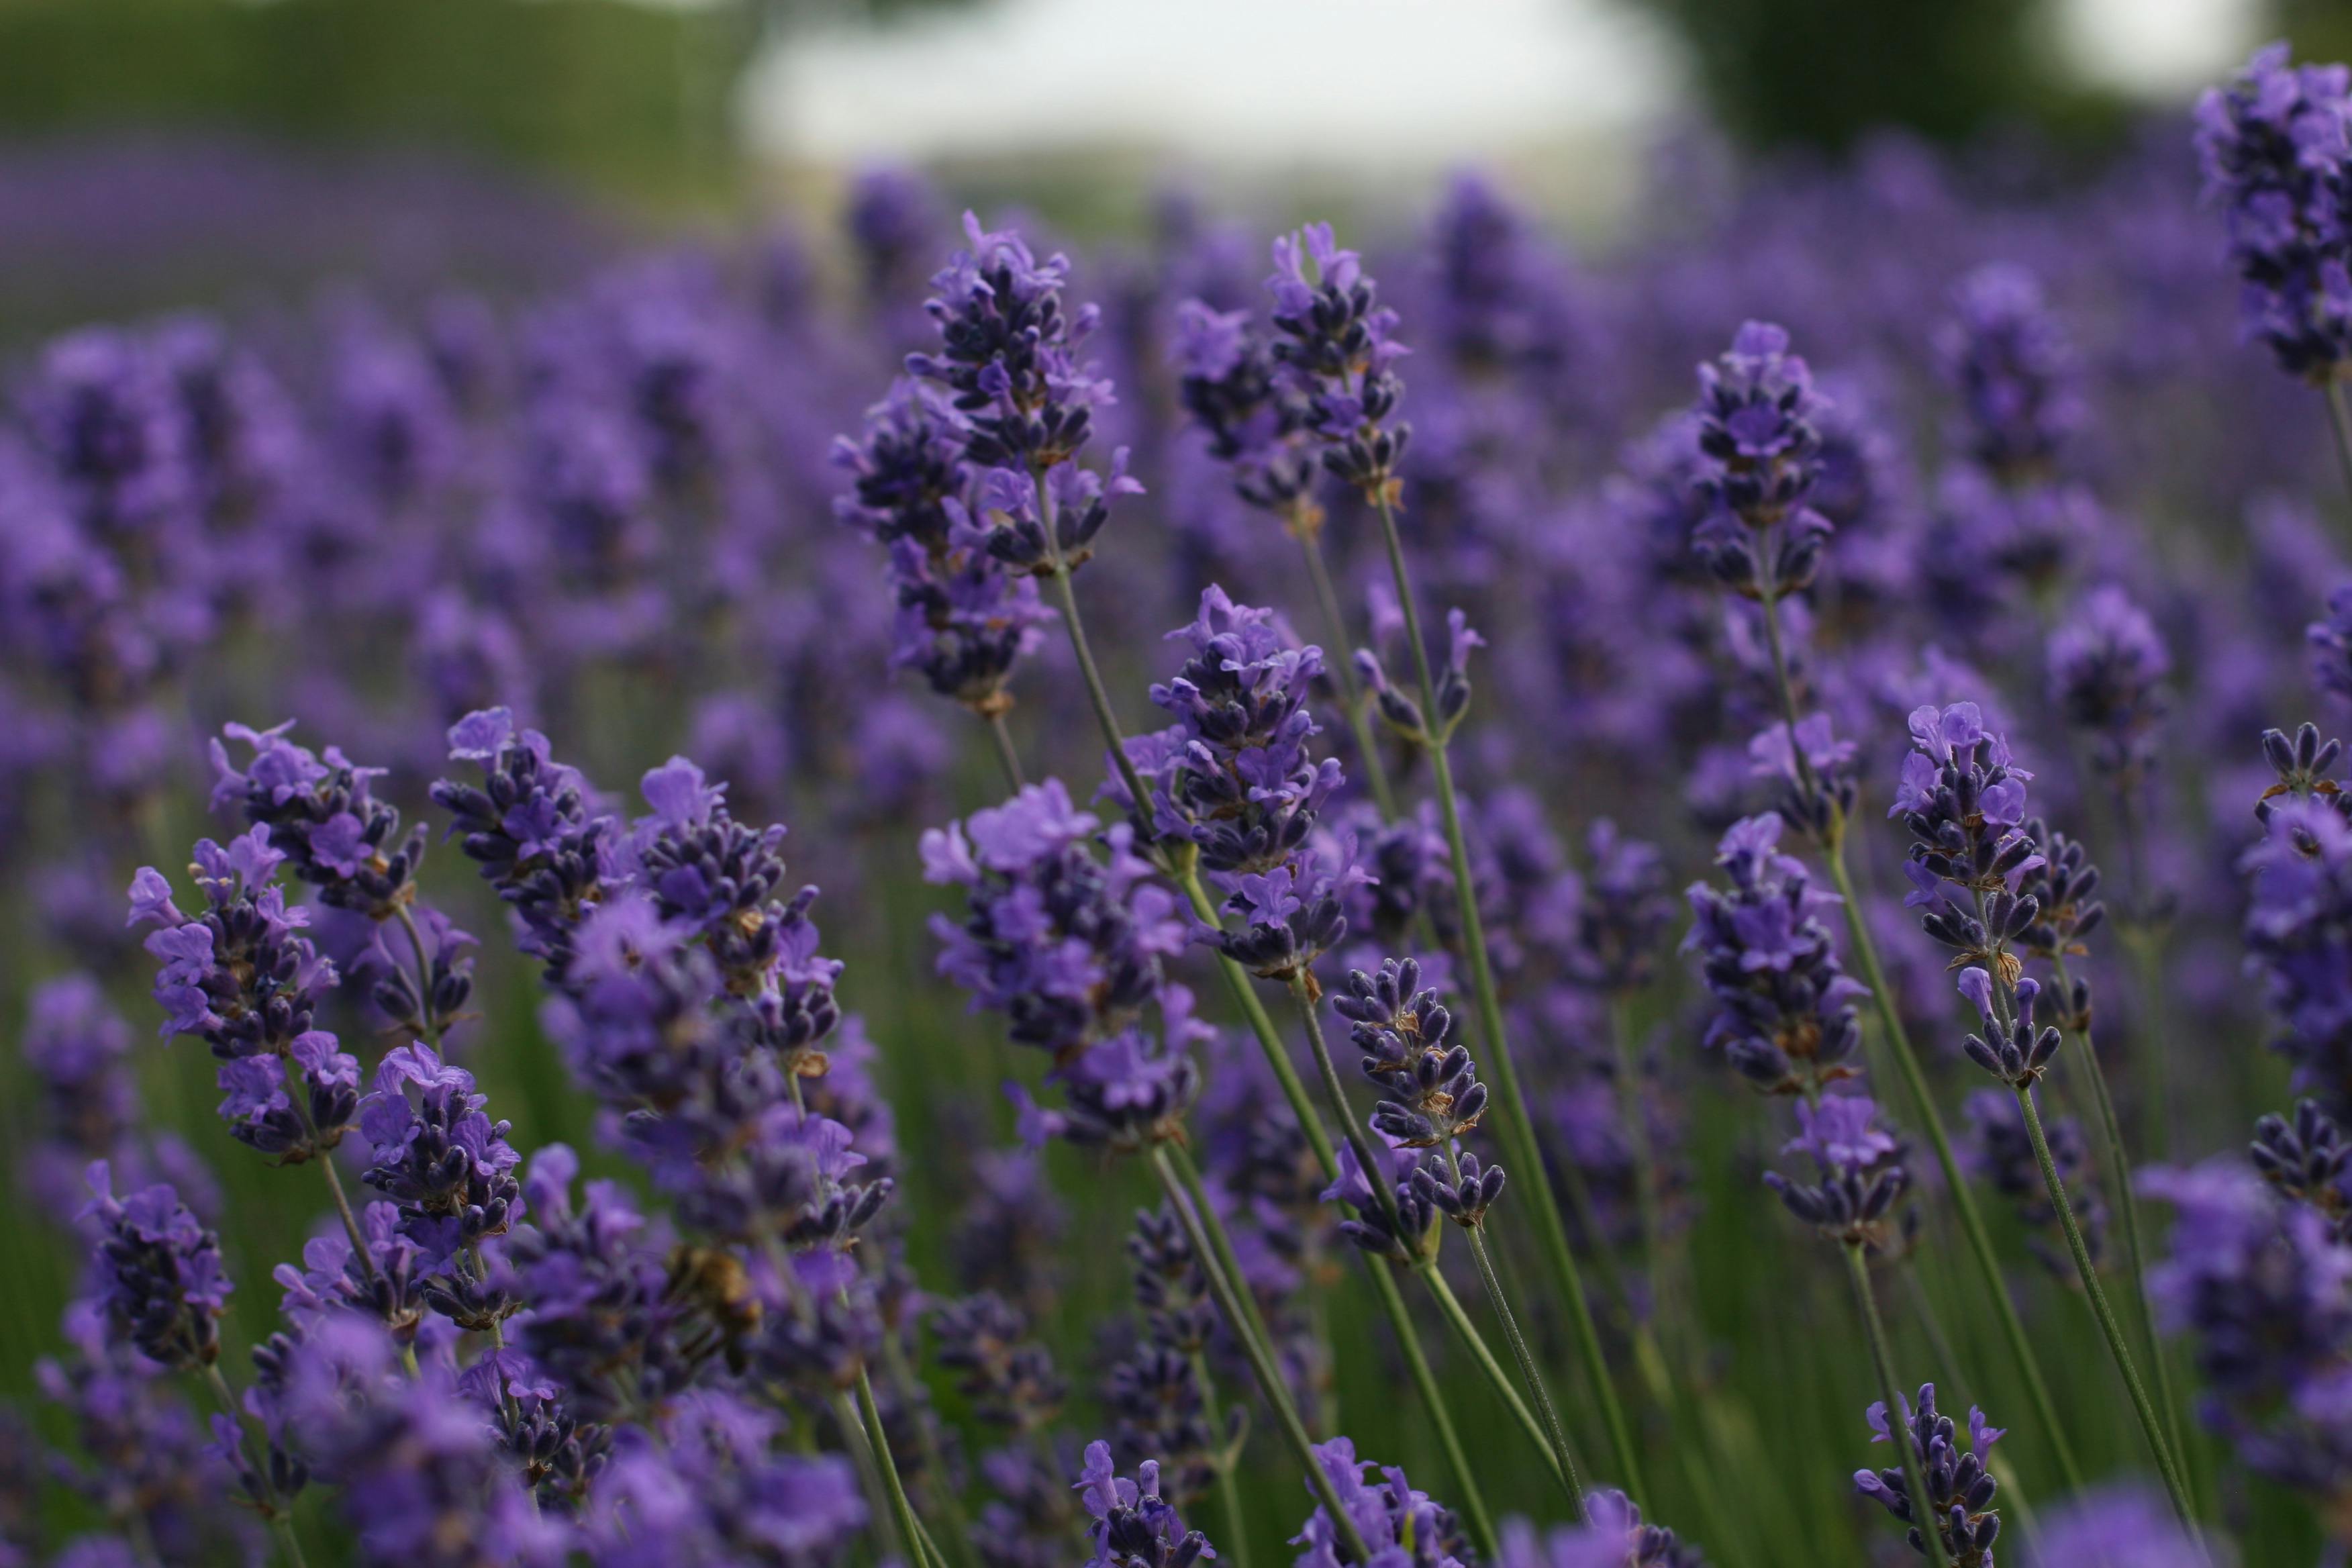 Lavender Field Images  Free Download on Freepik